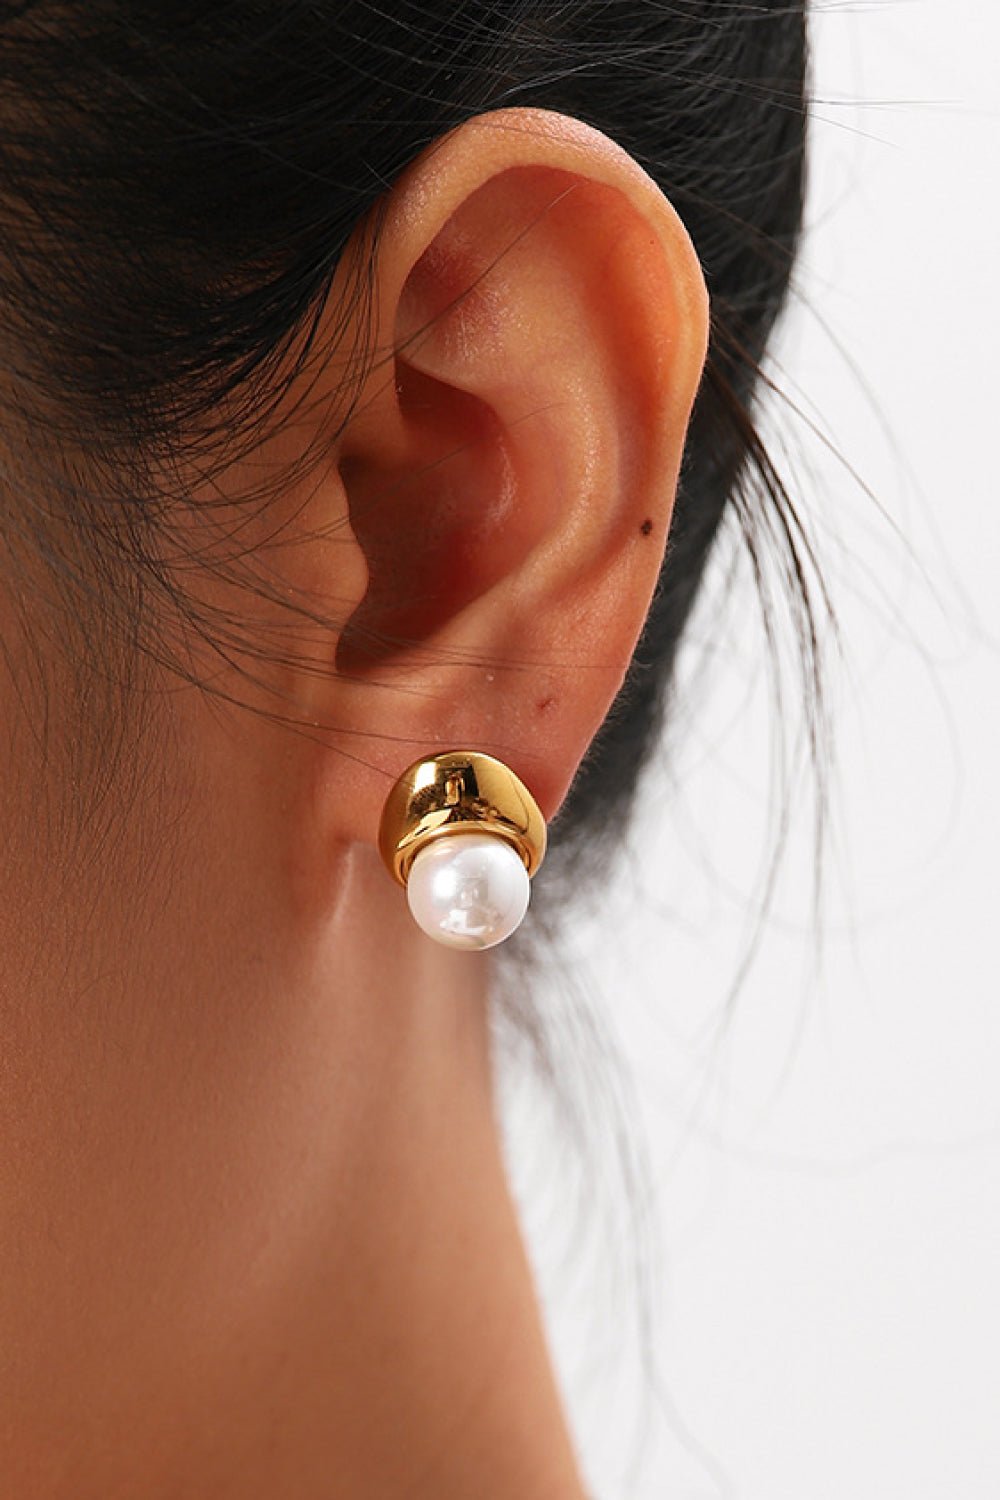 Lovelier Than Ever Pearl Stud Earrings - OMG! Rose